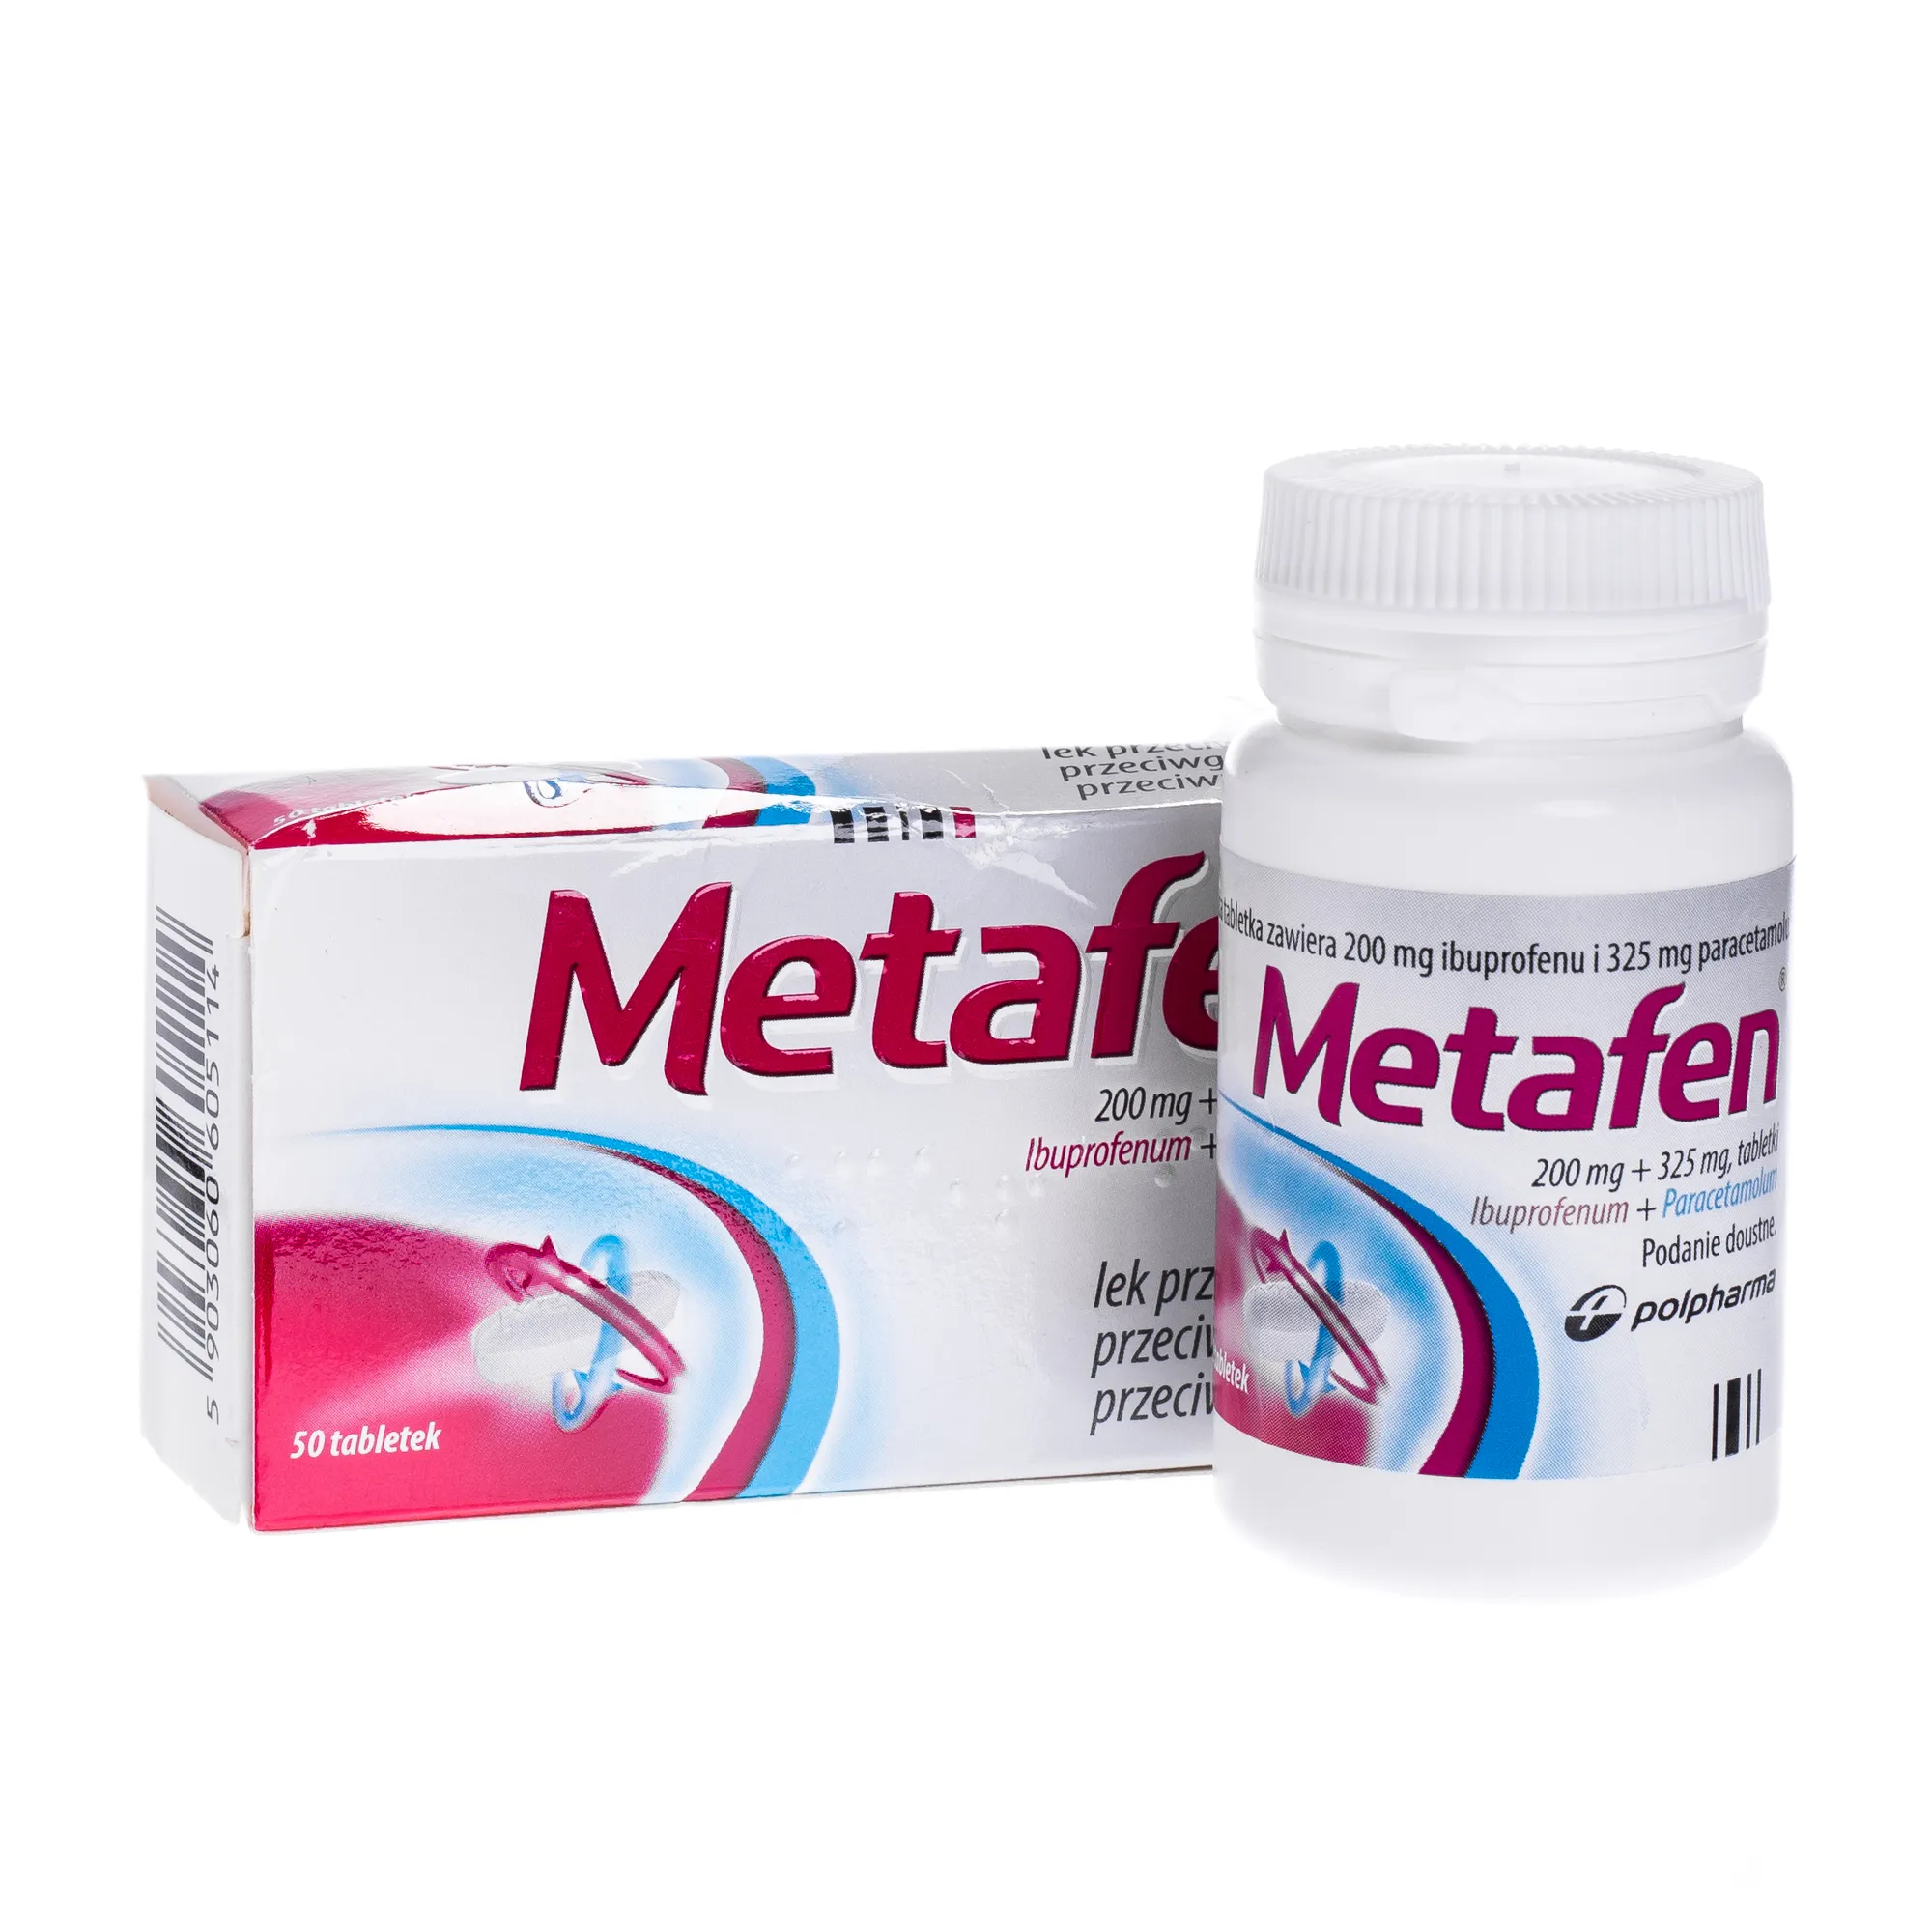 Metafen, lek przeciwbólowy, 50 tabletek 